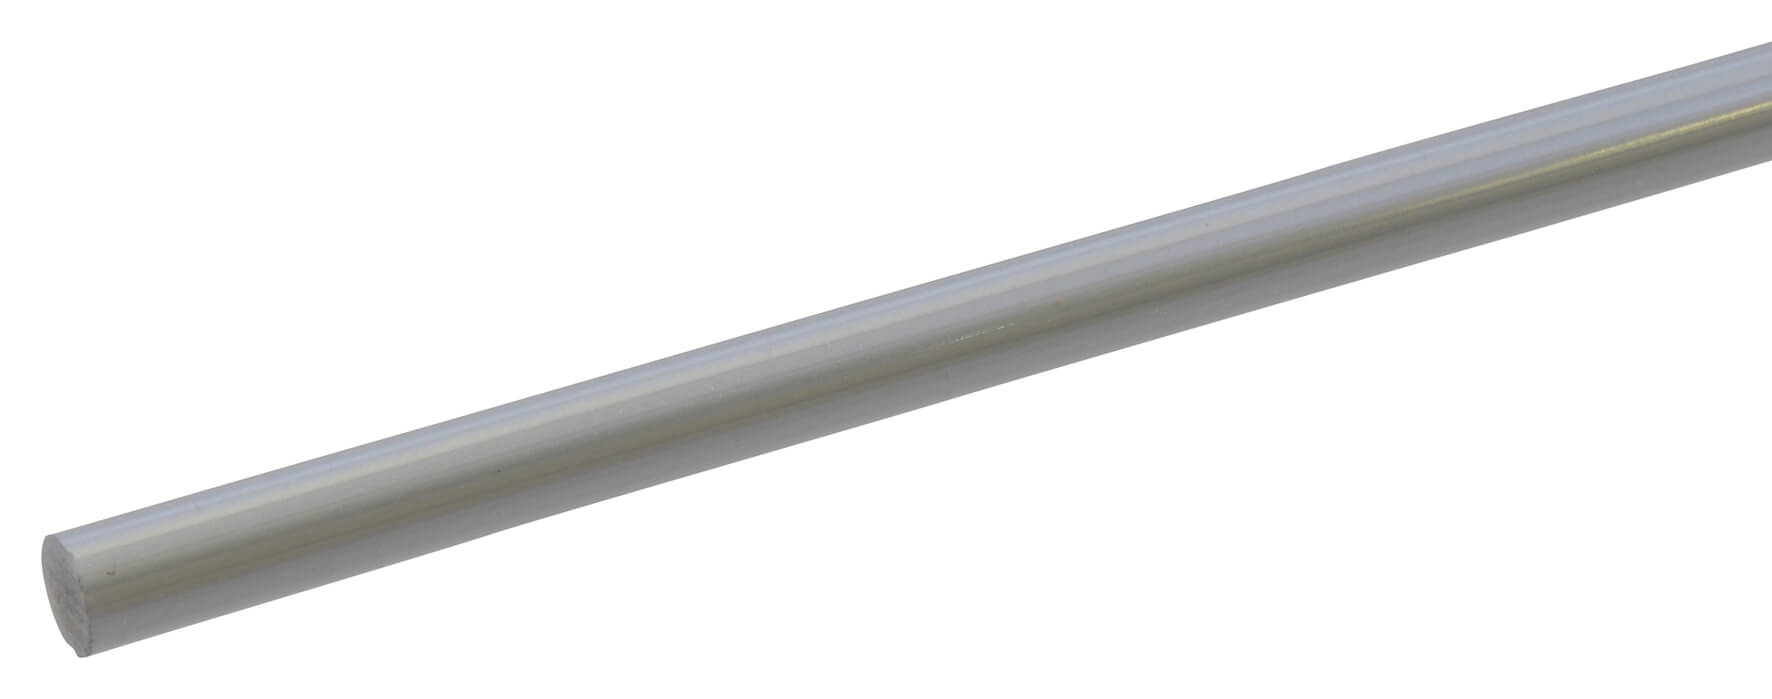 Metalic Acrylic Rod 6.4mm x 610mm - Solid Silver